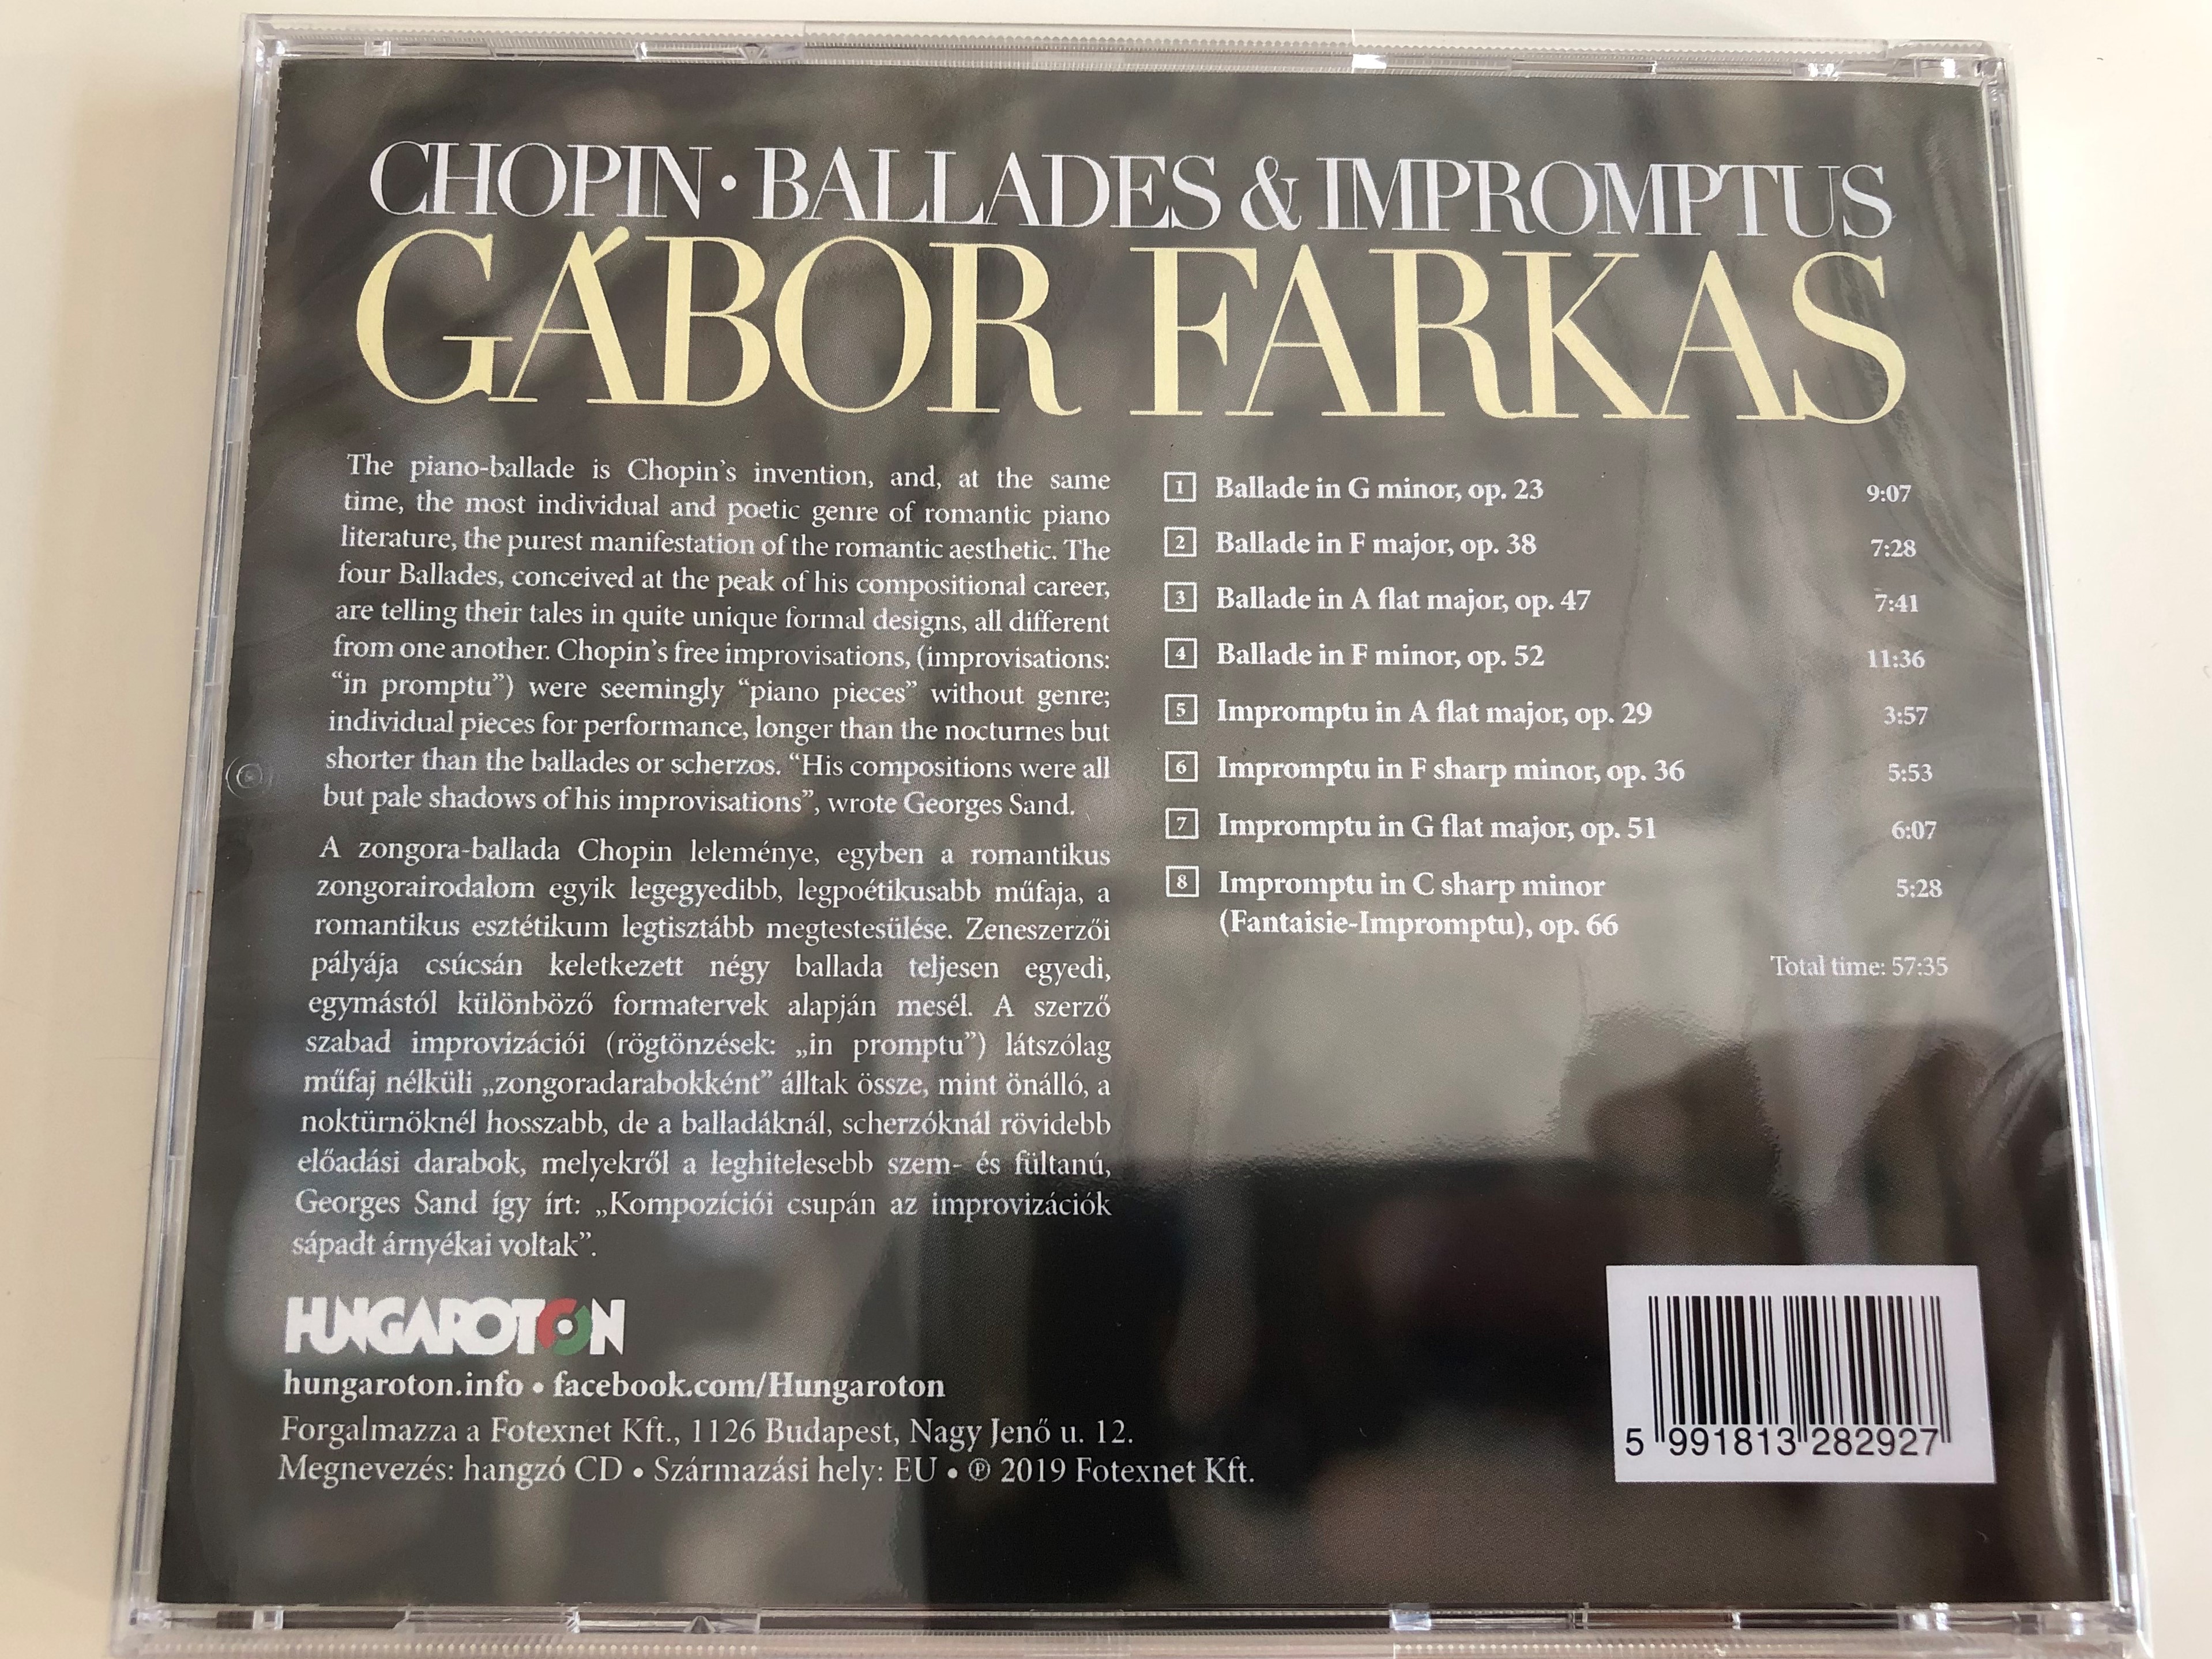 chopin-ballades-impromptus-g-bor-farkas-audio-cd-2019-hungaroton-2-.jpg